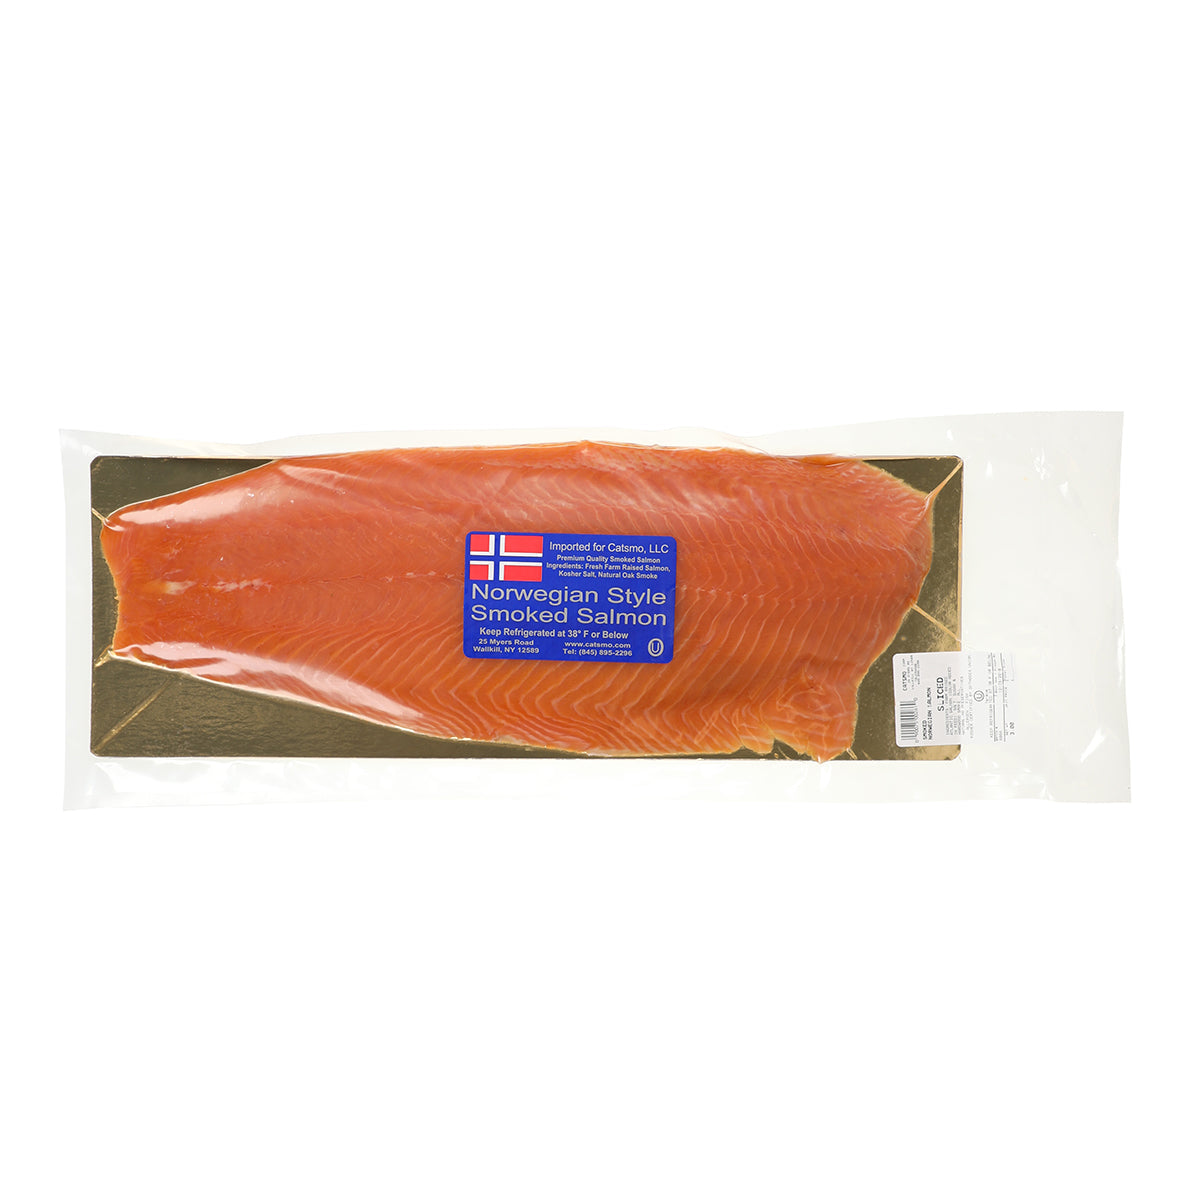 Catsmo Pre Sliced Smoked Norwegian Salmon